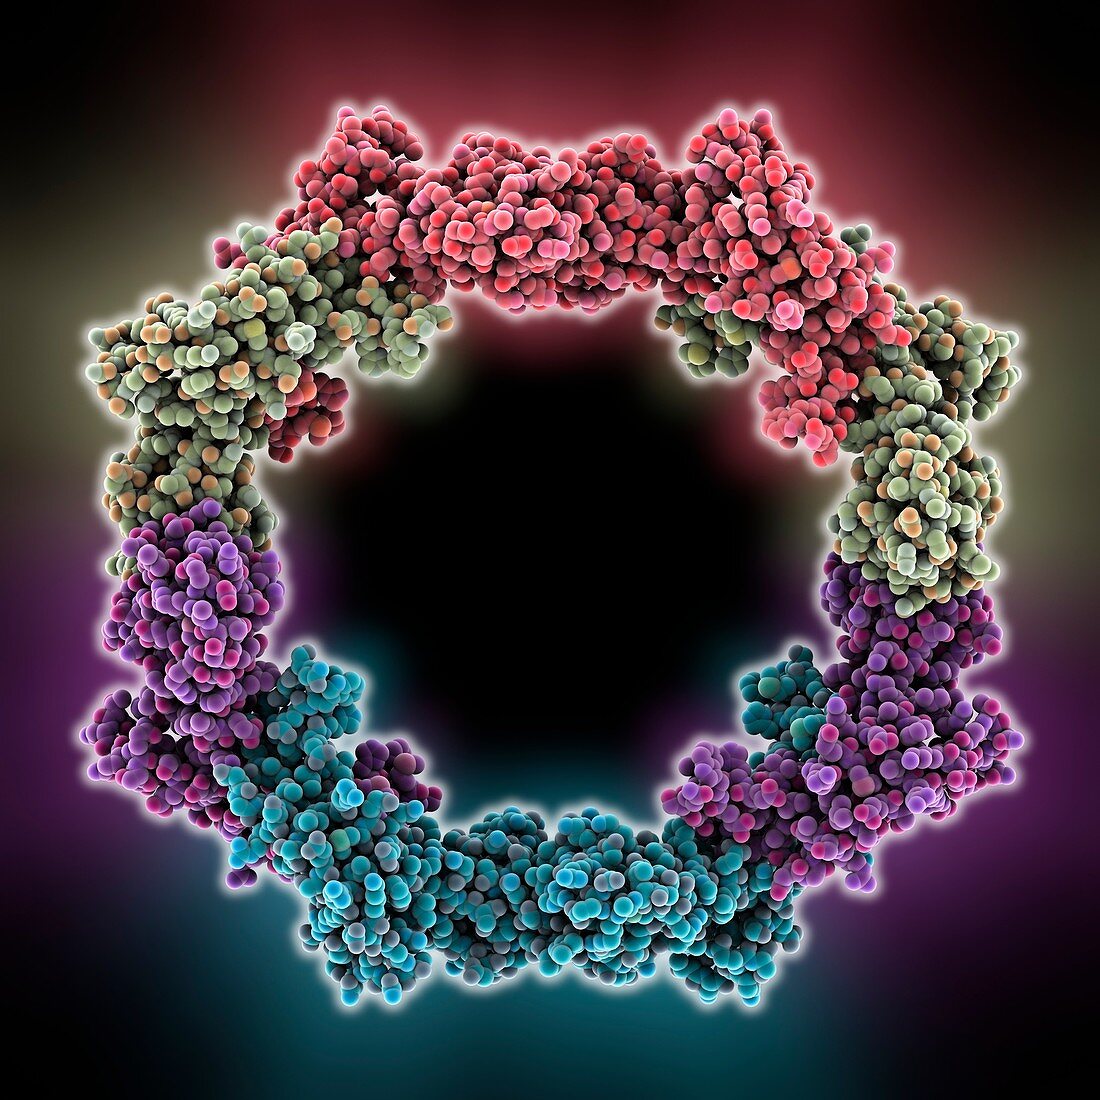 RNA interference viral suppressor